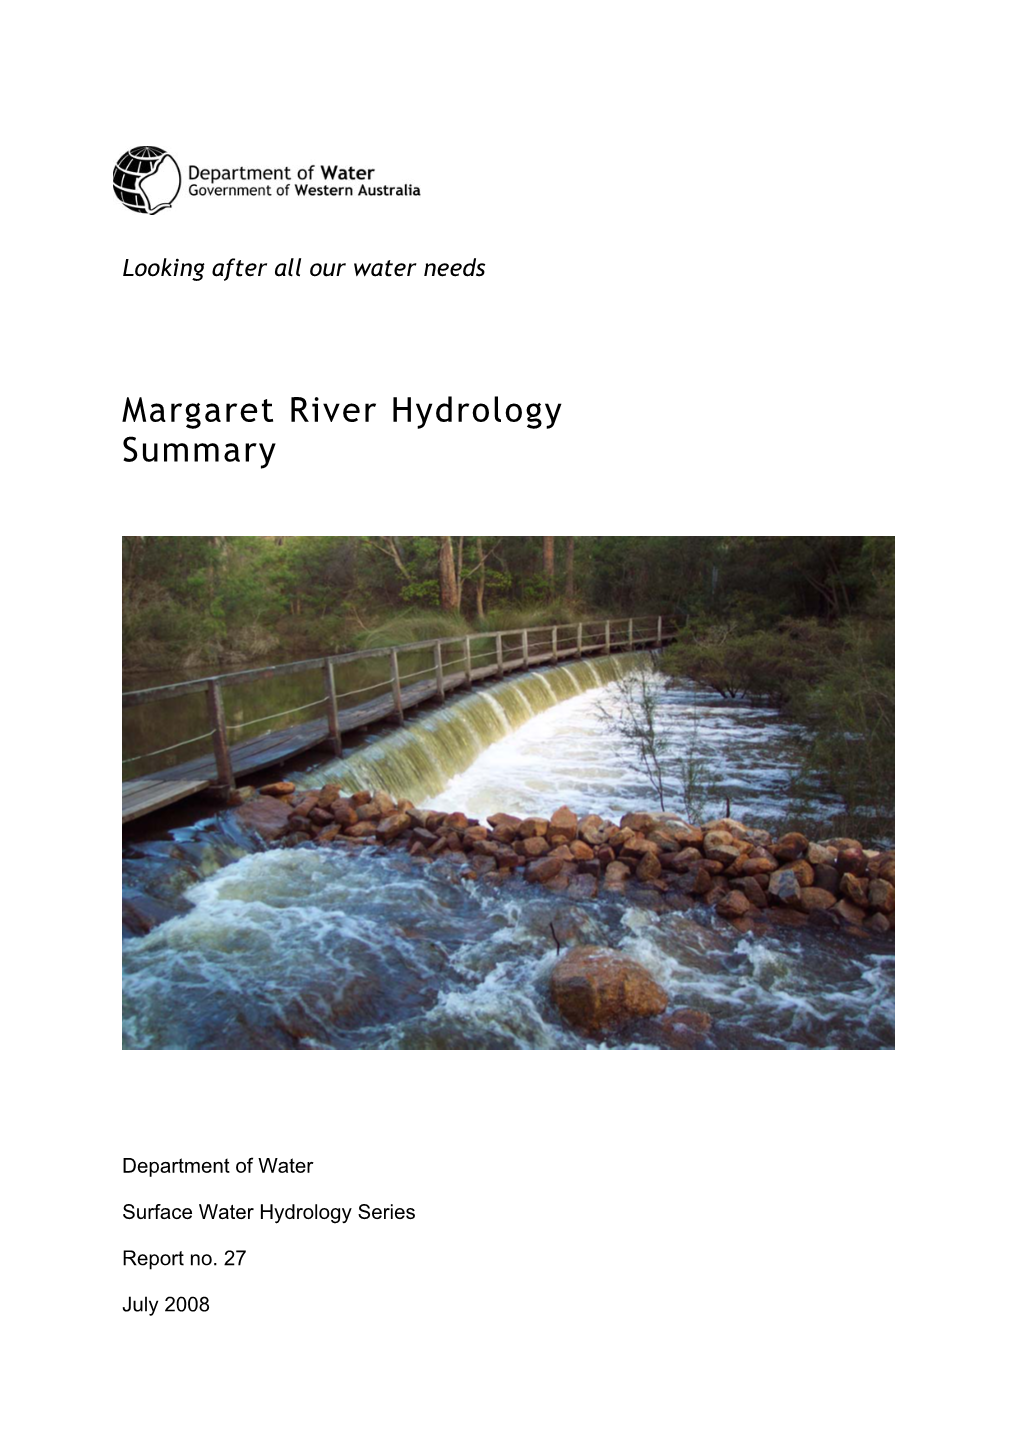 Margaret River Hydrology Summary